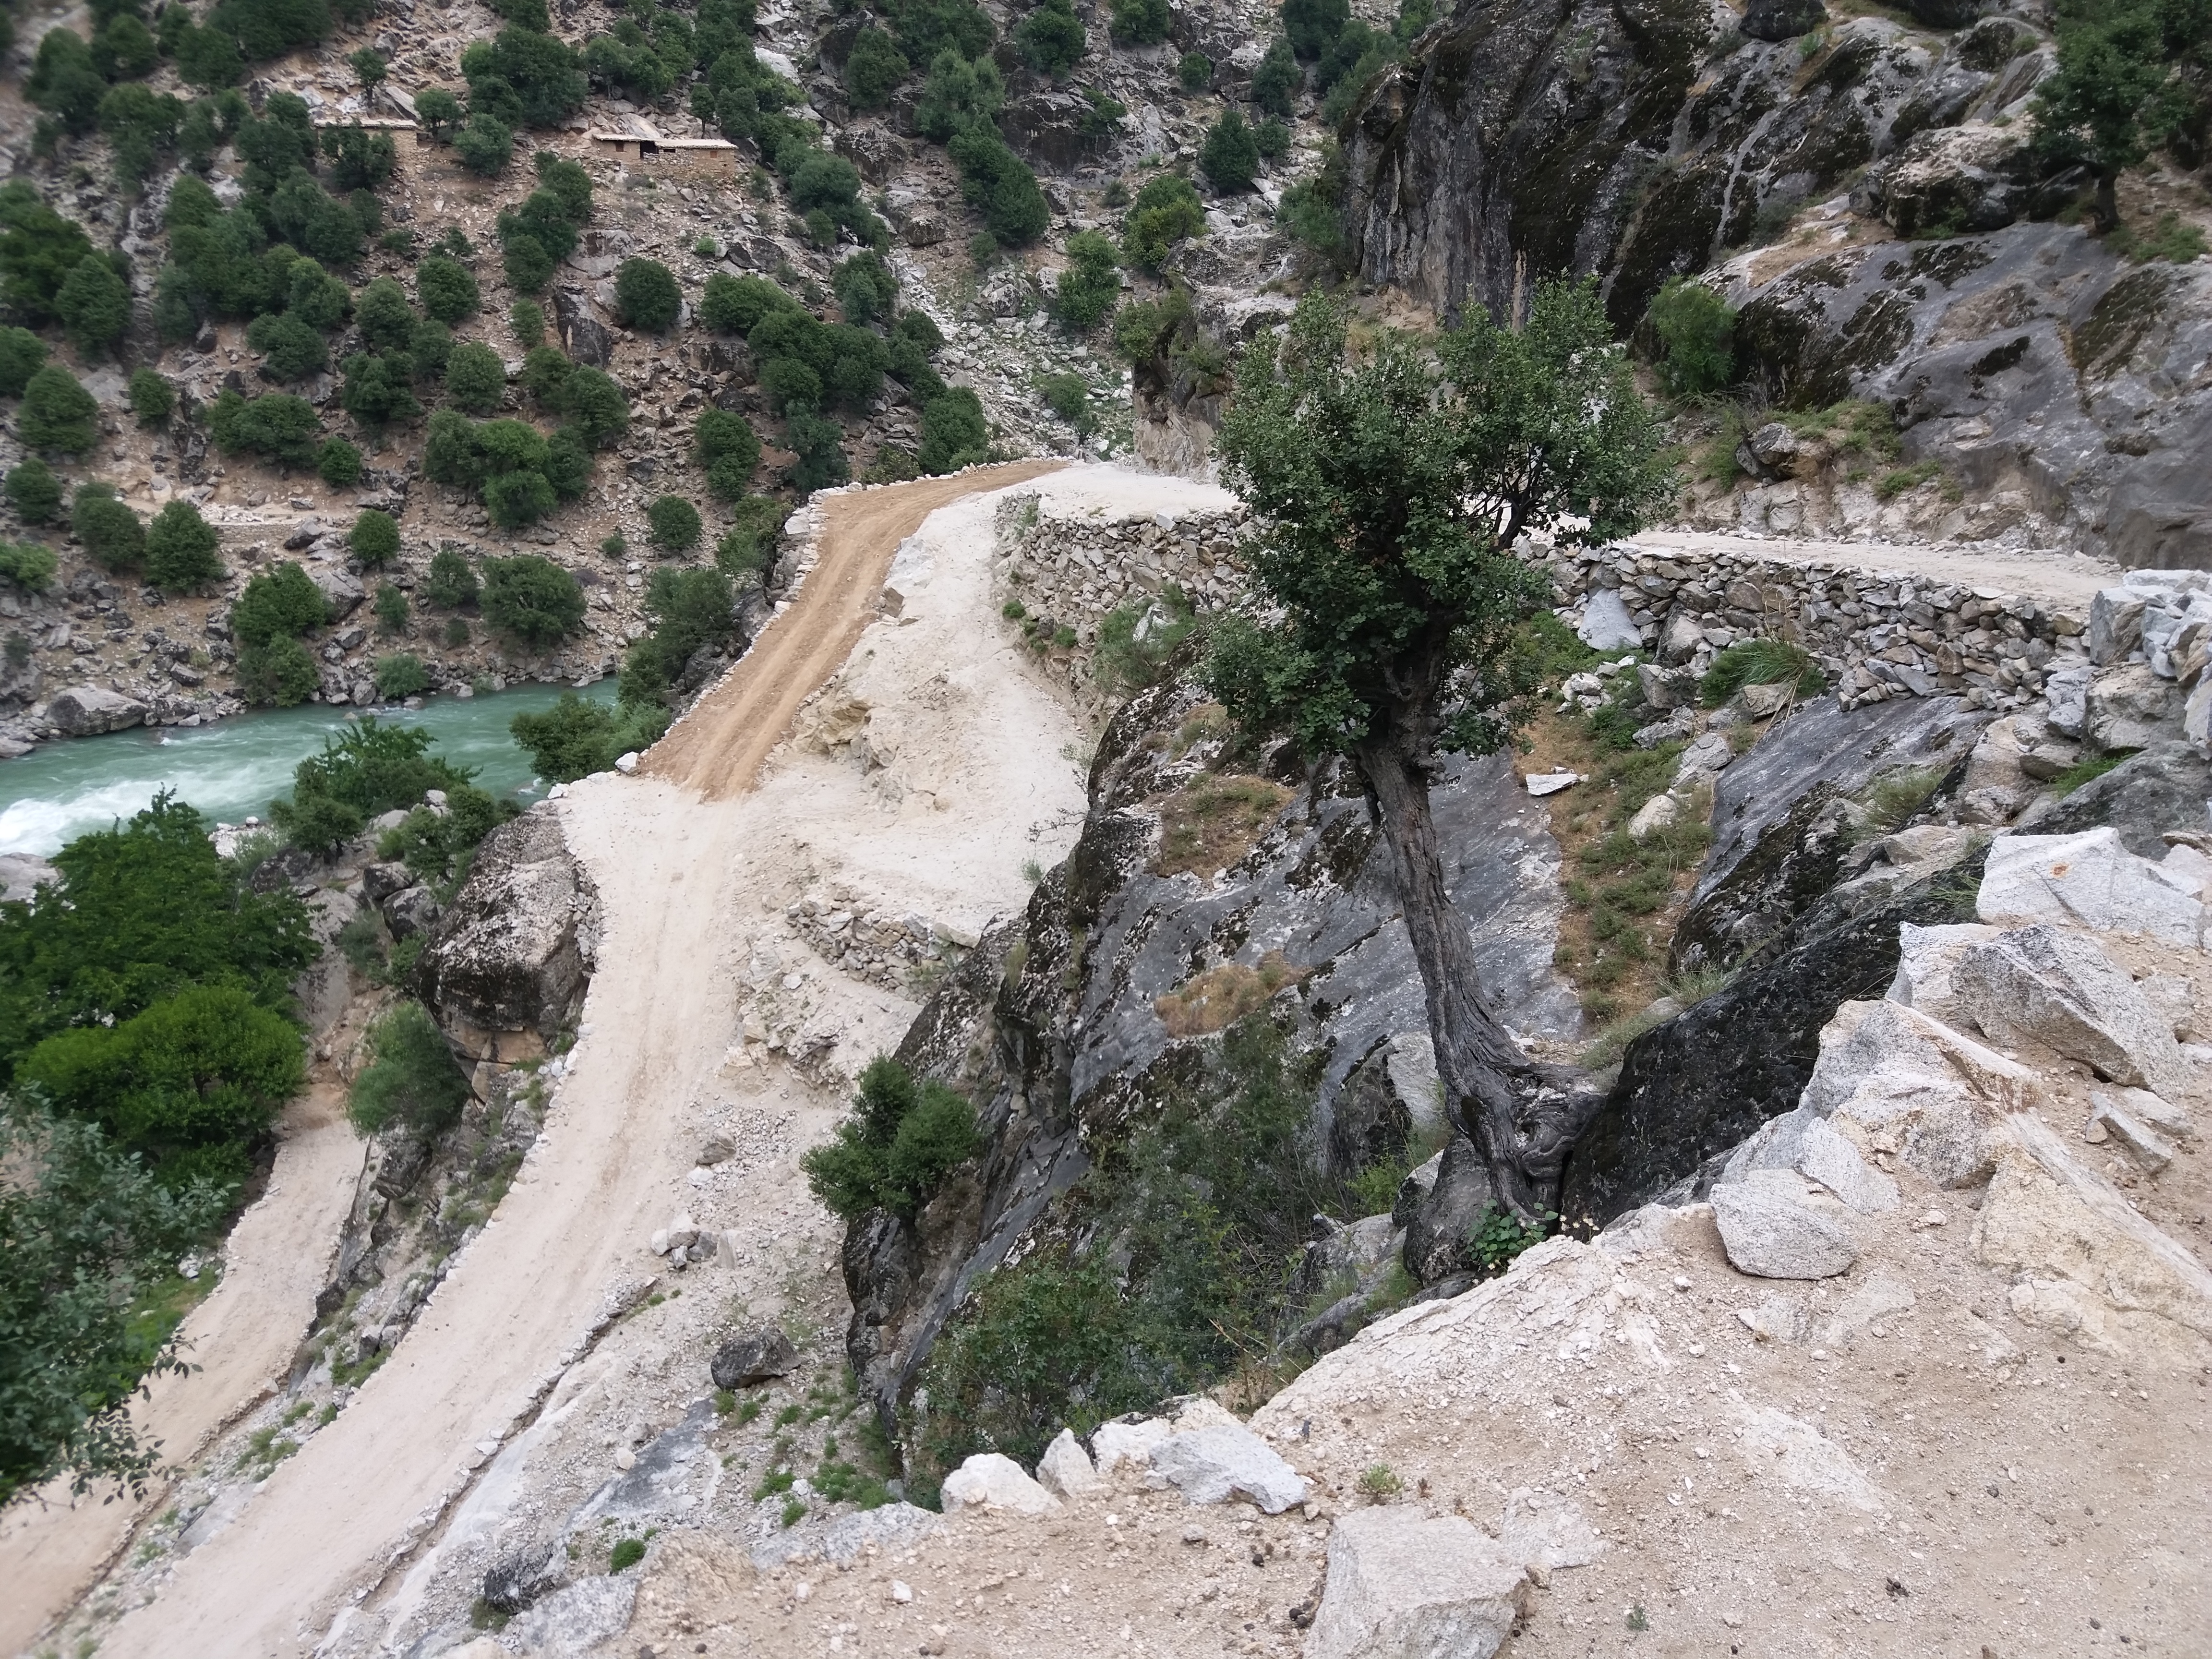 Road project in Wama district, Nooristan province